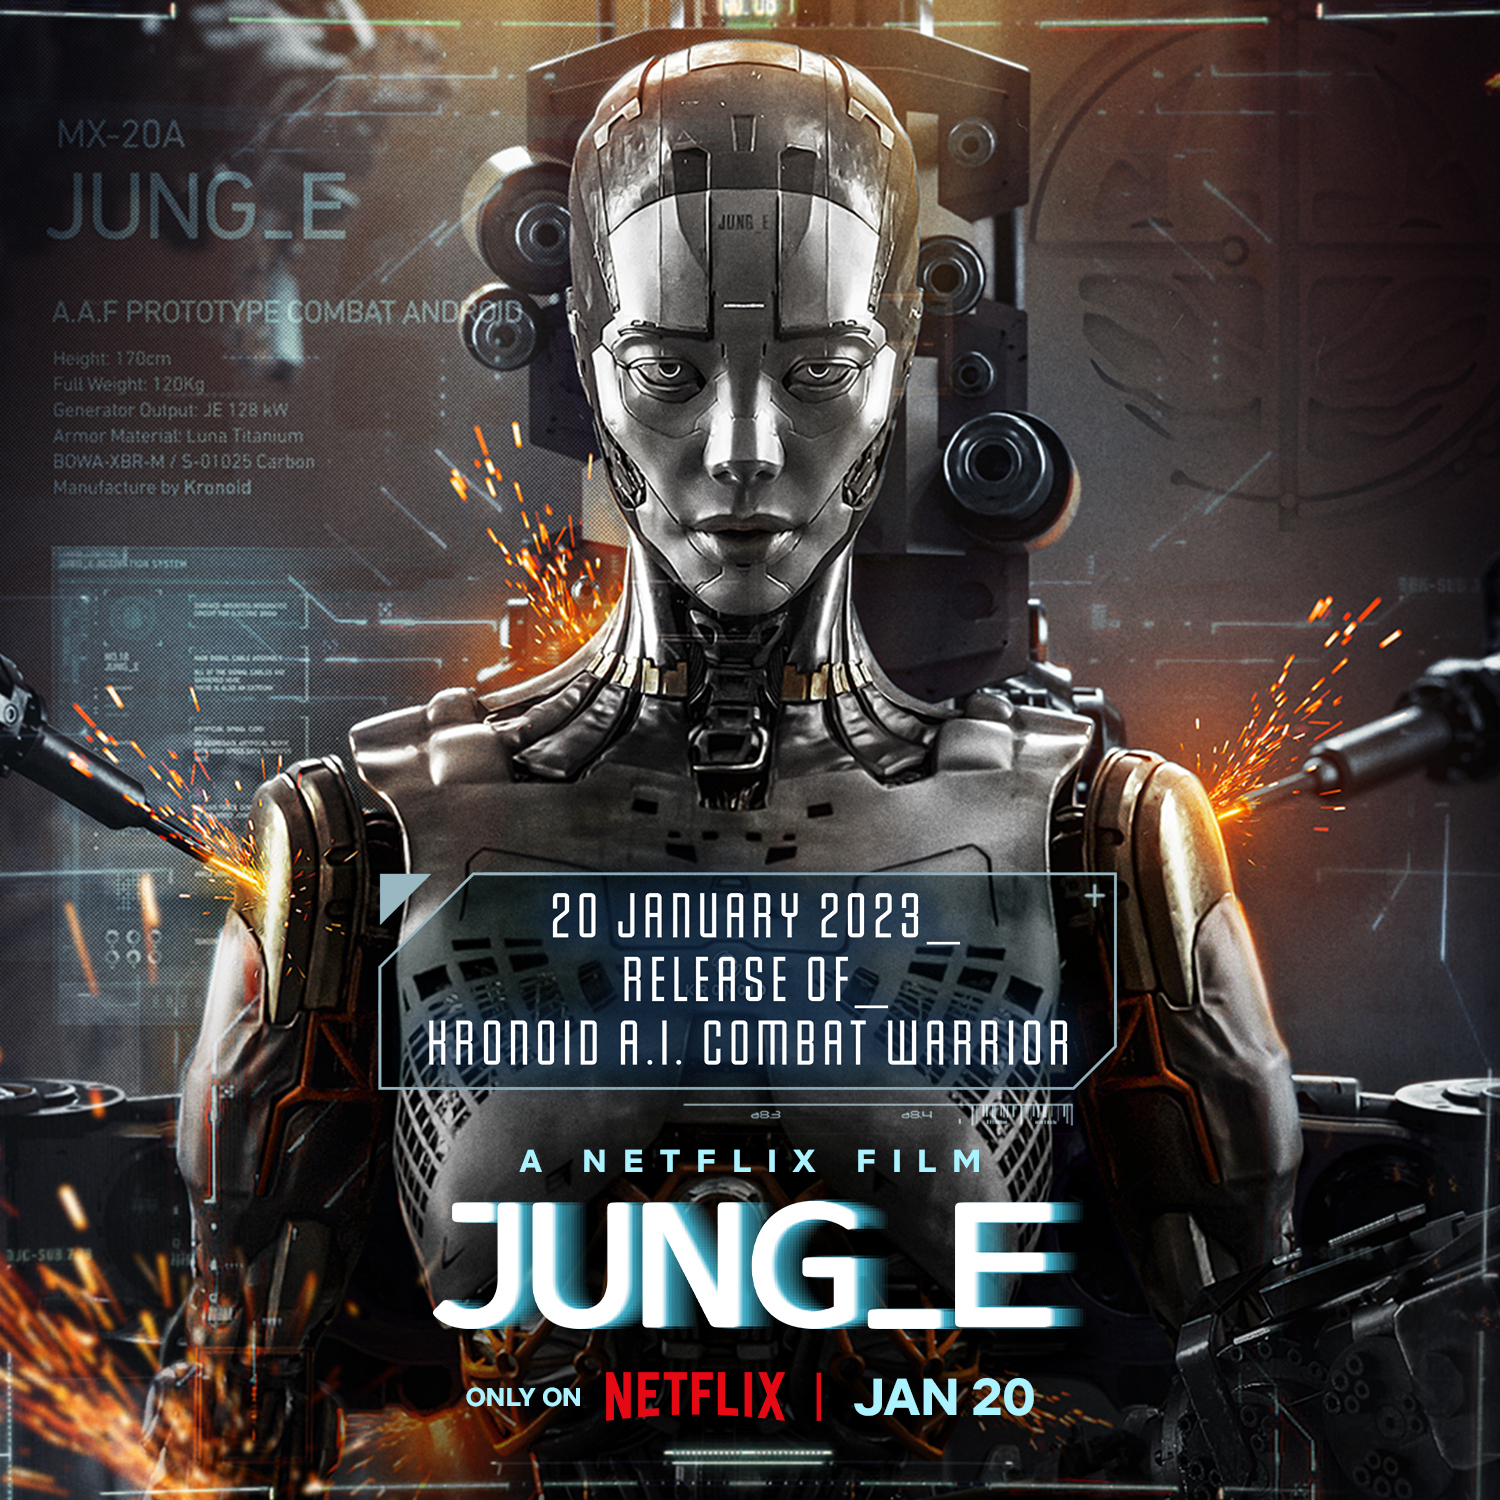 JUNG_E film poster